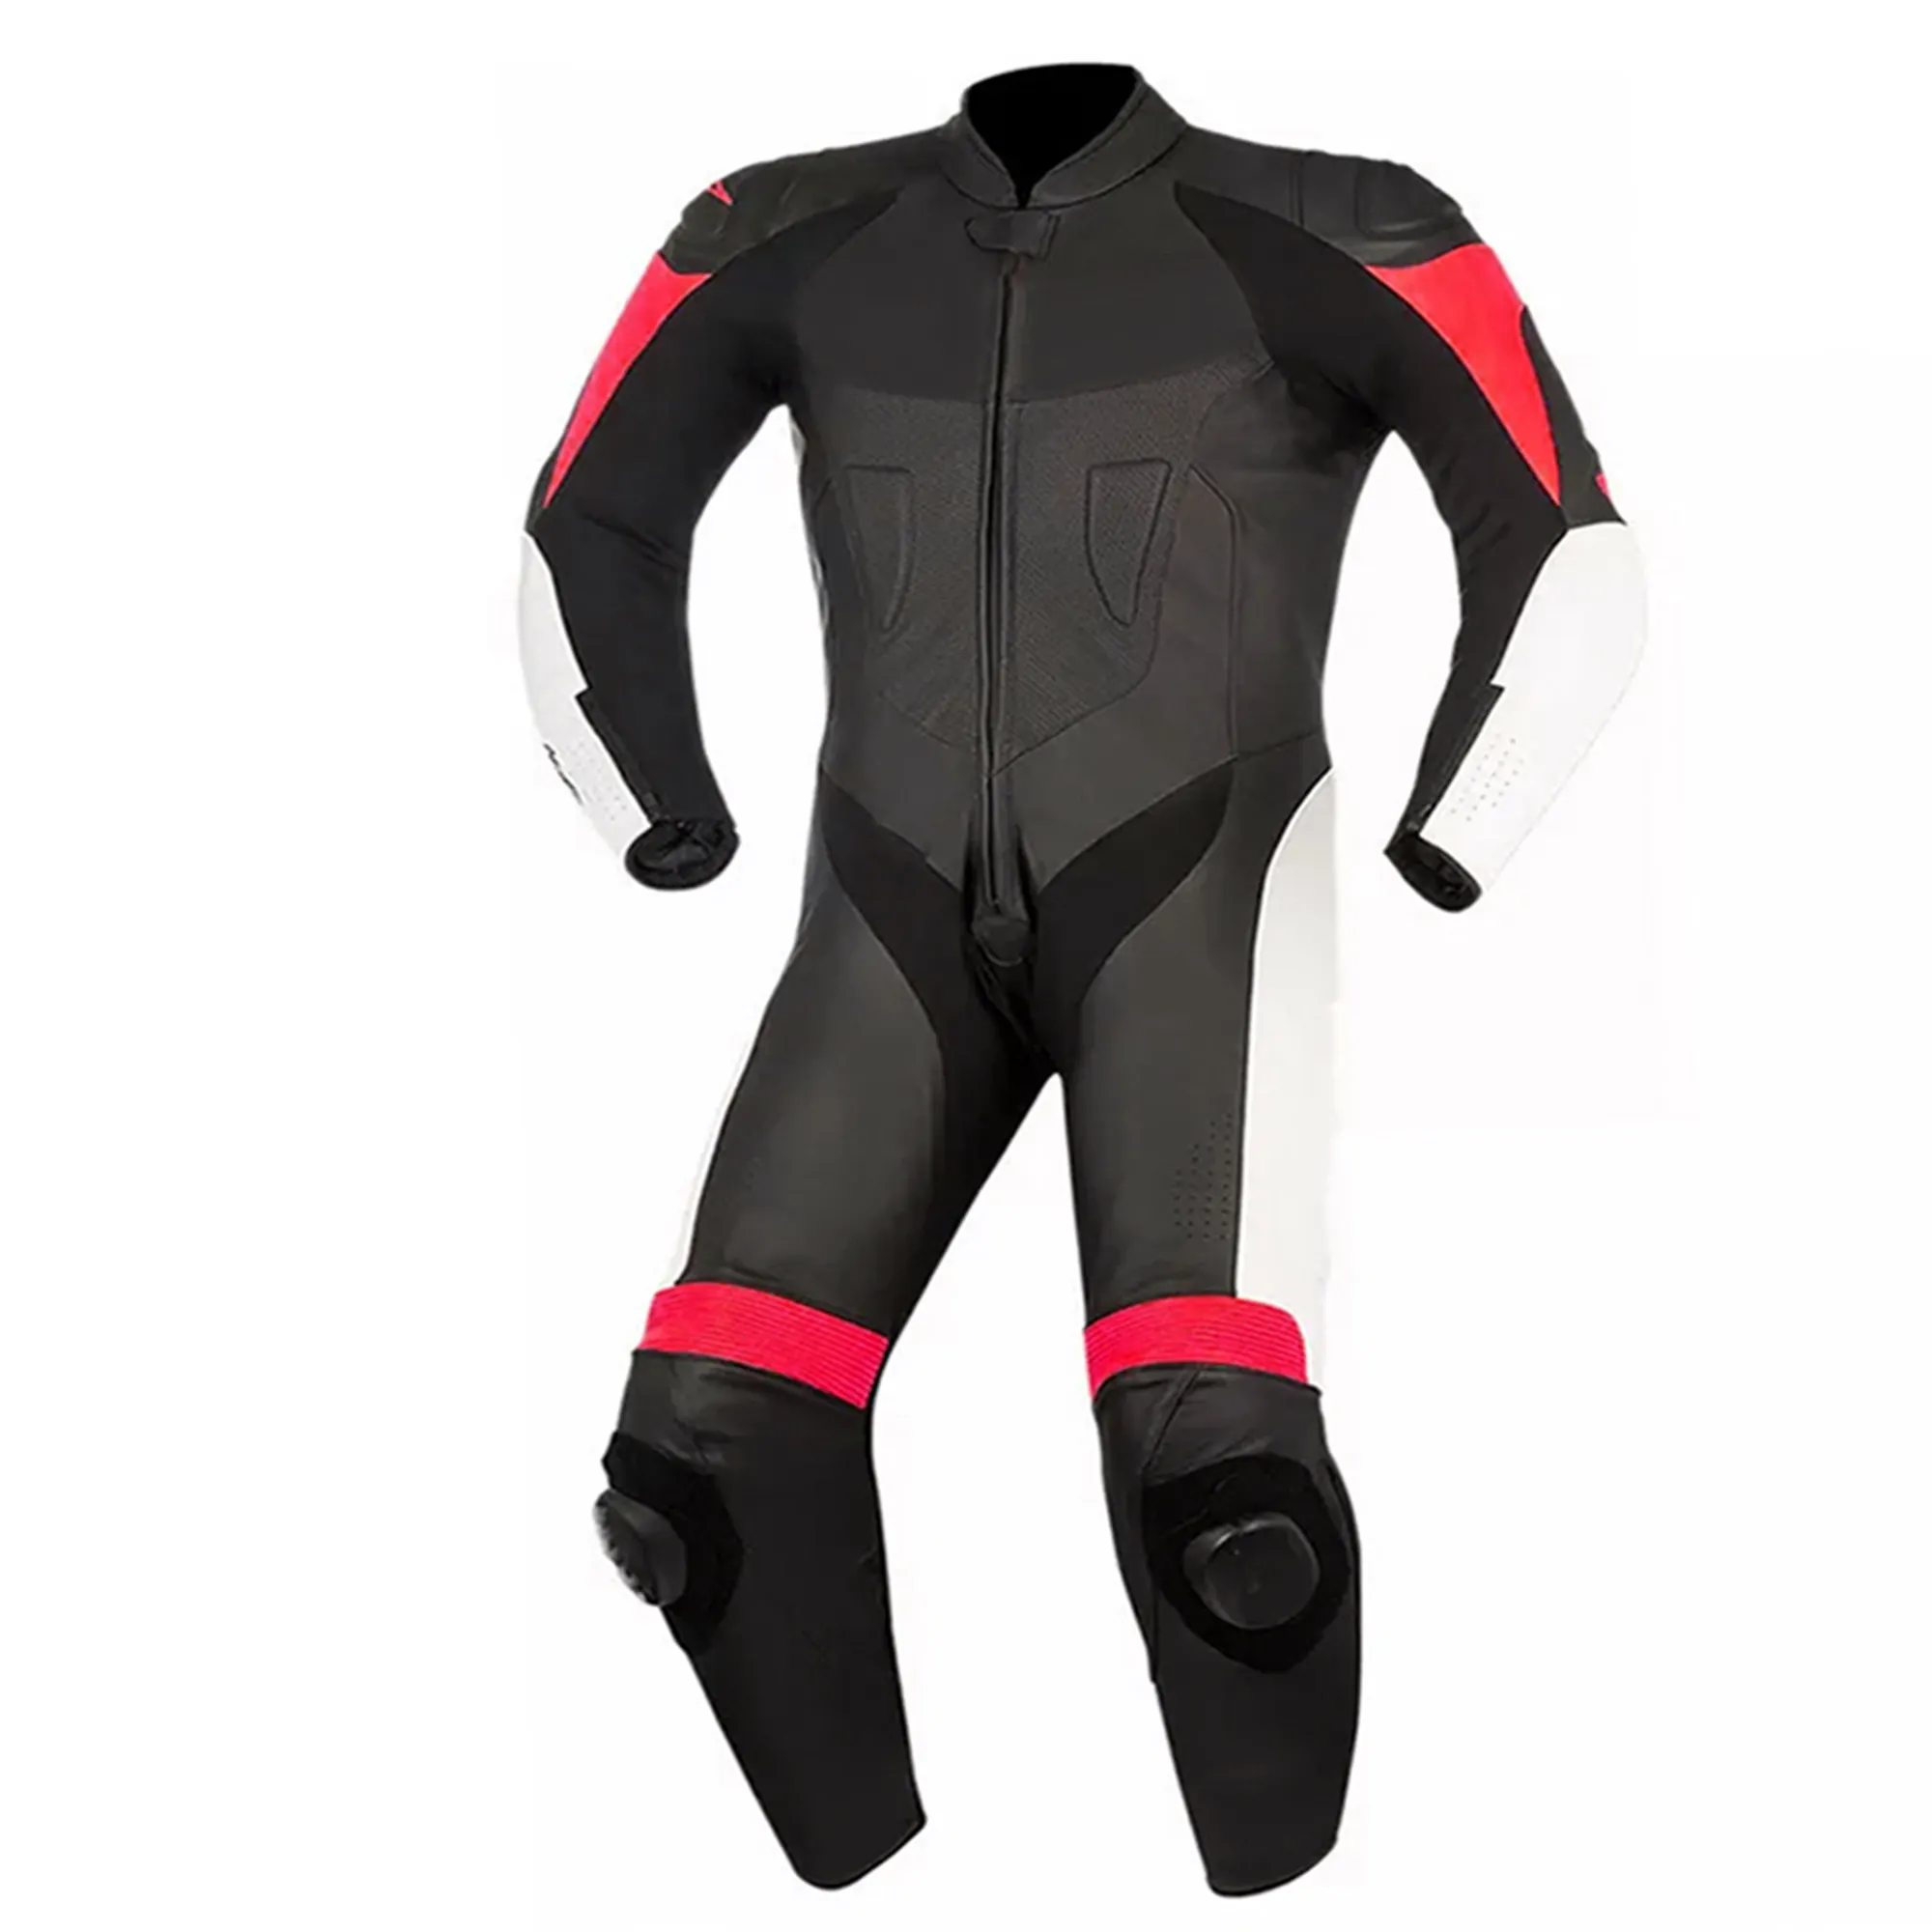 Motocross Pants & Jersey Combos Motocross Custom Racing Suit Motorcycle Moto Dirt Bike uniform